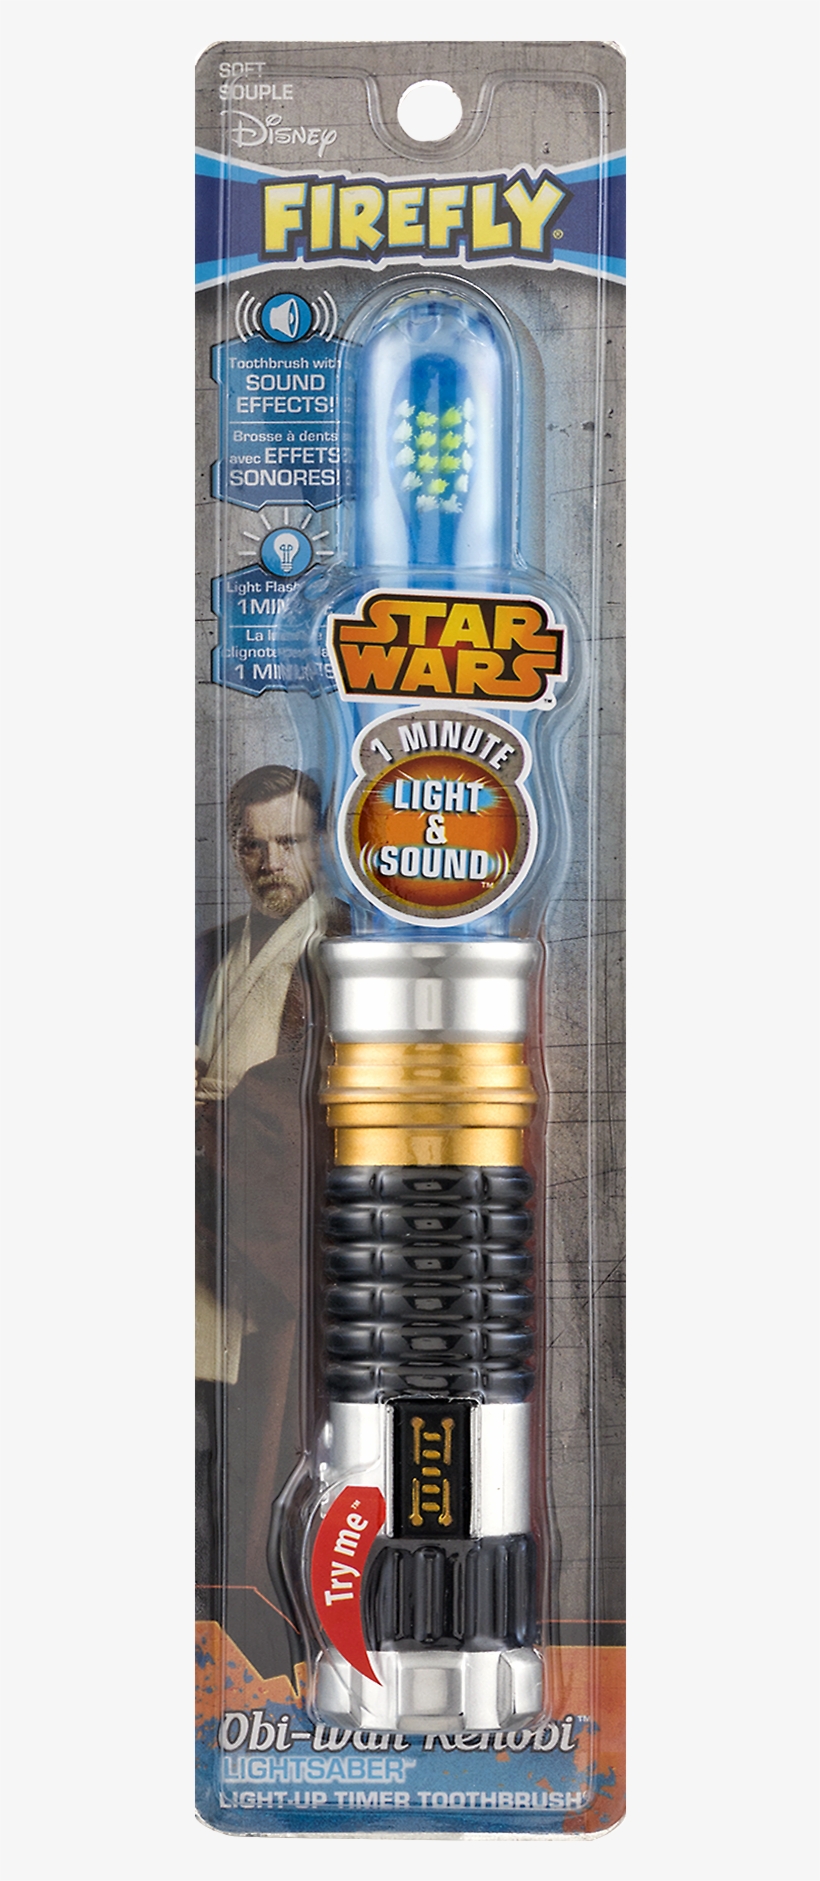 Firefly® Star Wars™ Obi-wan Kenobi Lightsaber™ Lightup - Firefly Firefly Star Wars Lightsaber Darth Vader Toothbrush, transparent png #425279